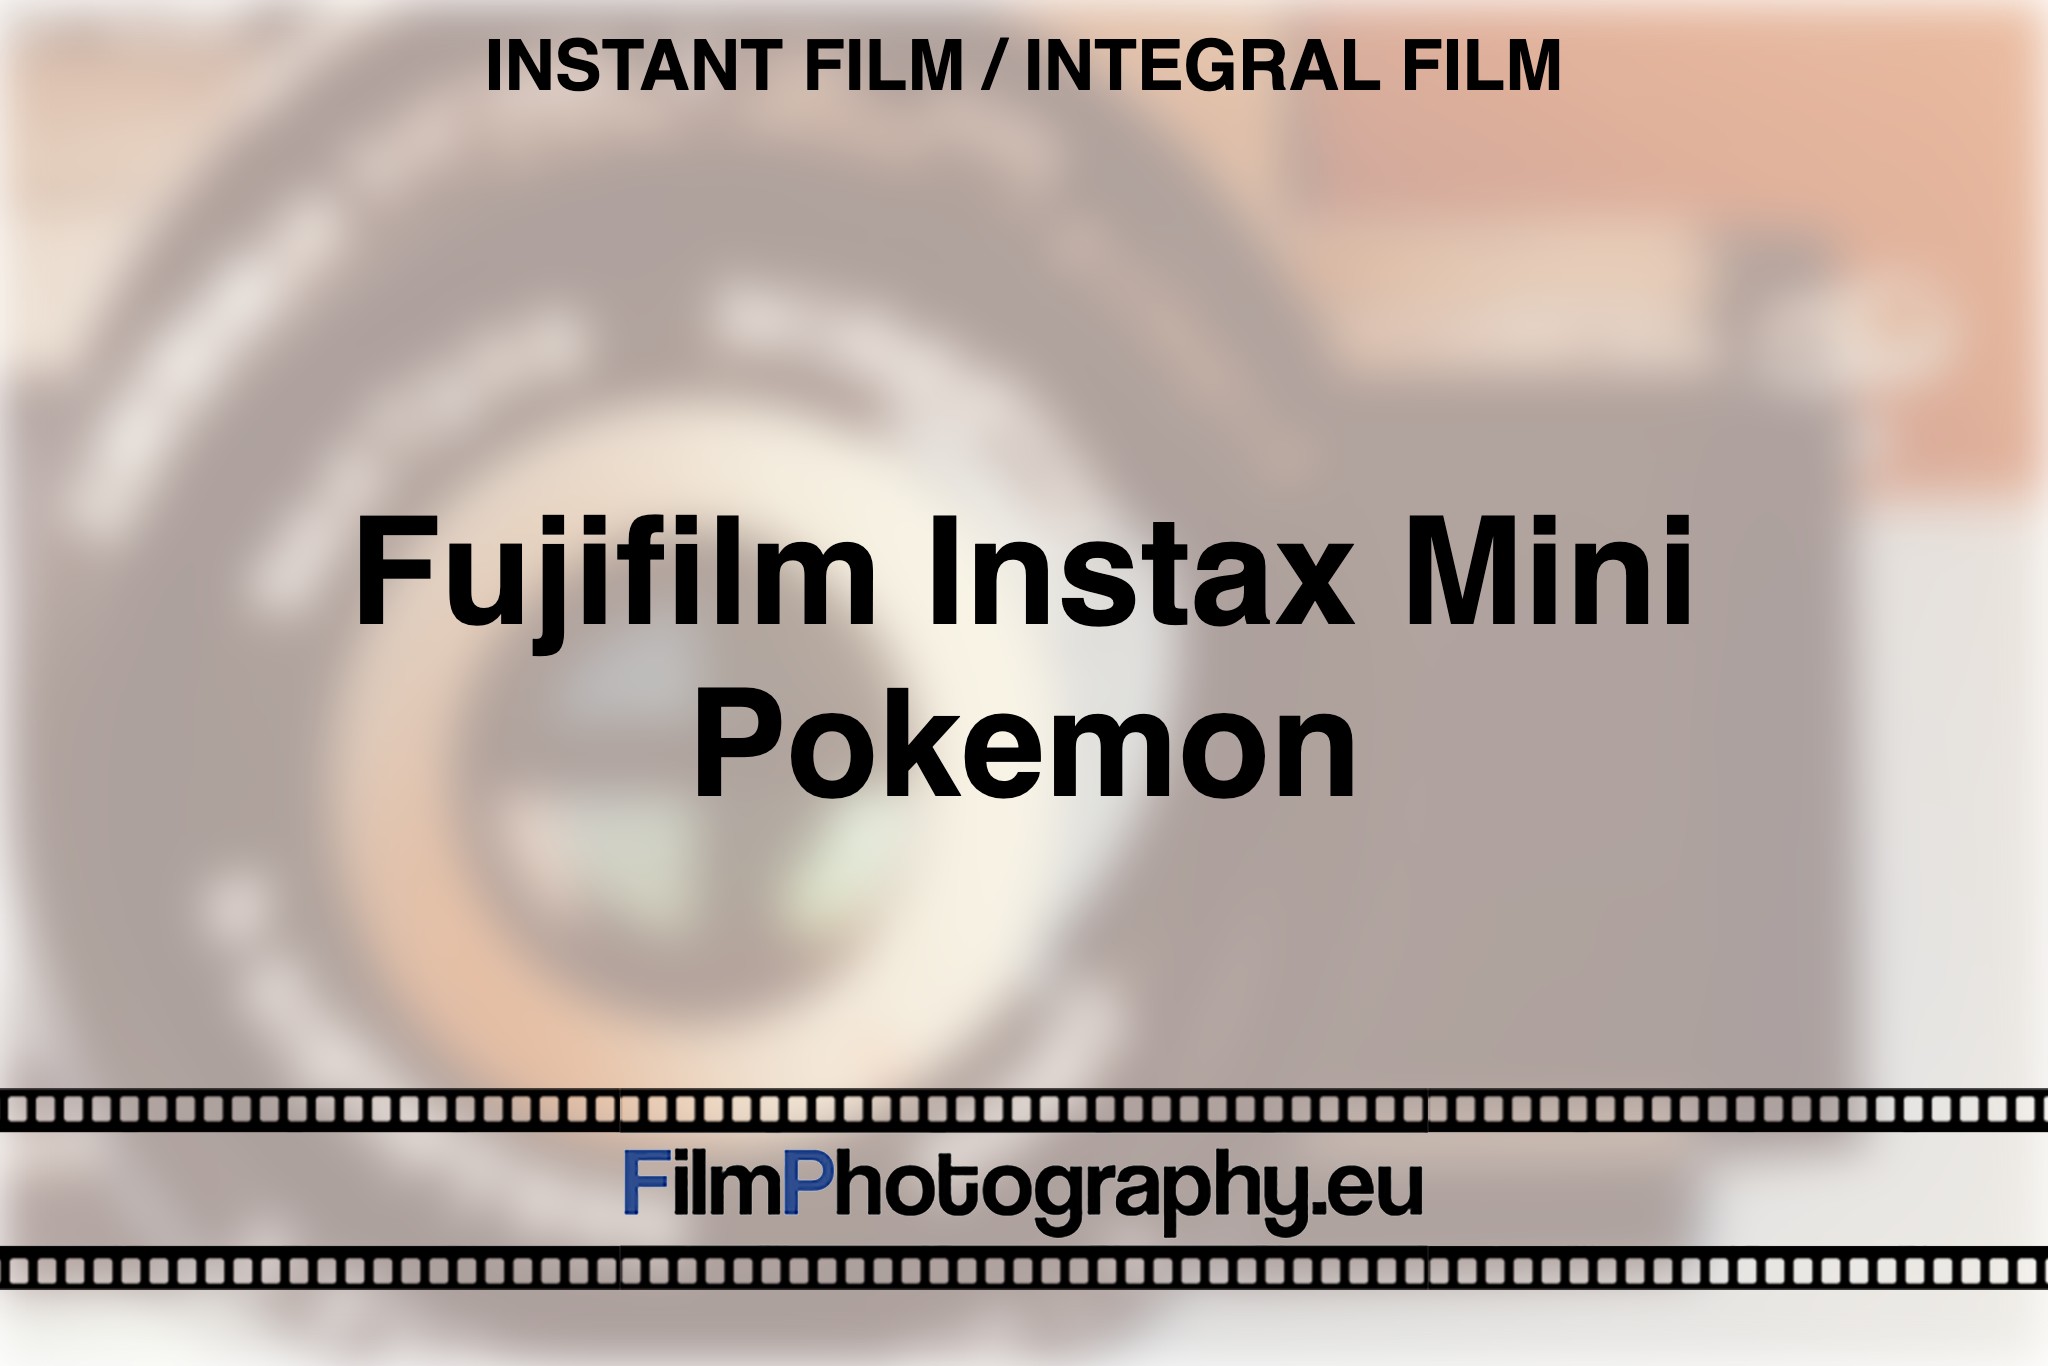 fujifilm-instax-mini-pokemon-instant-film-integral-film-bnv